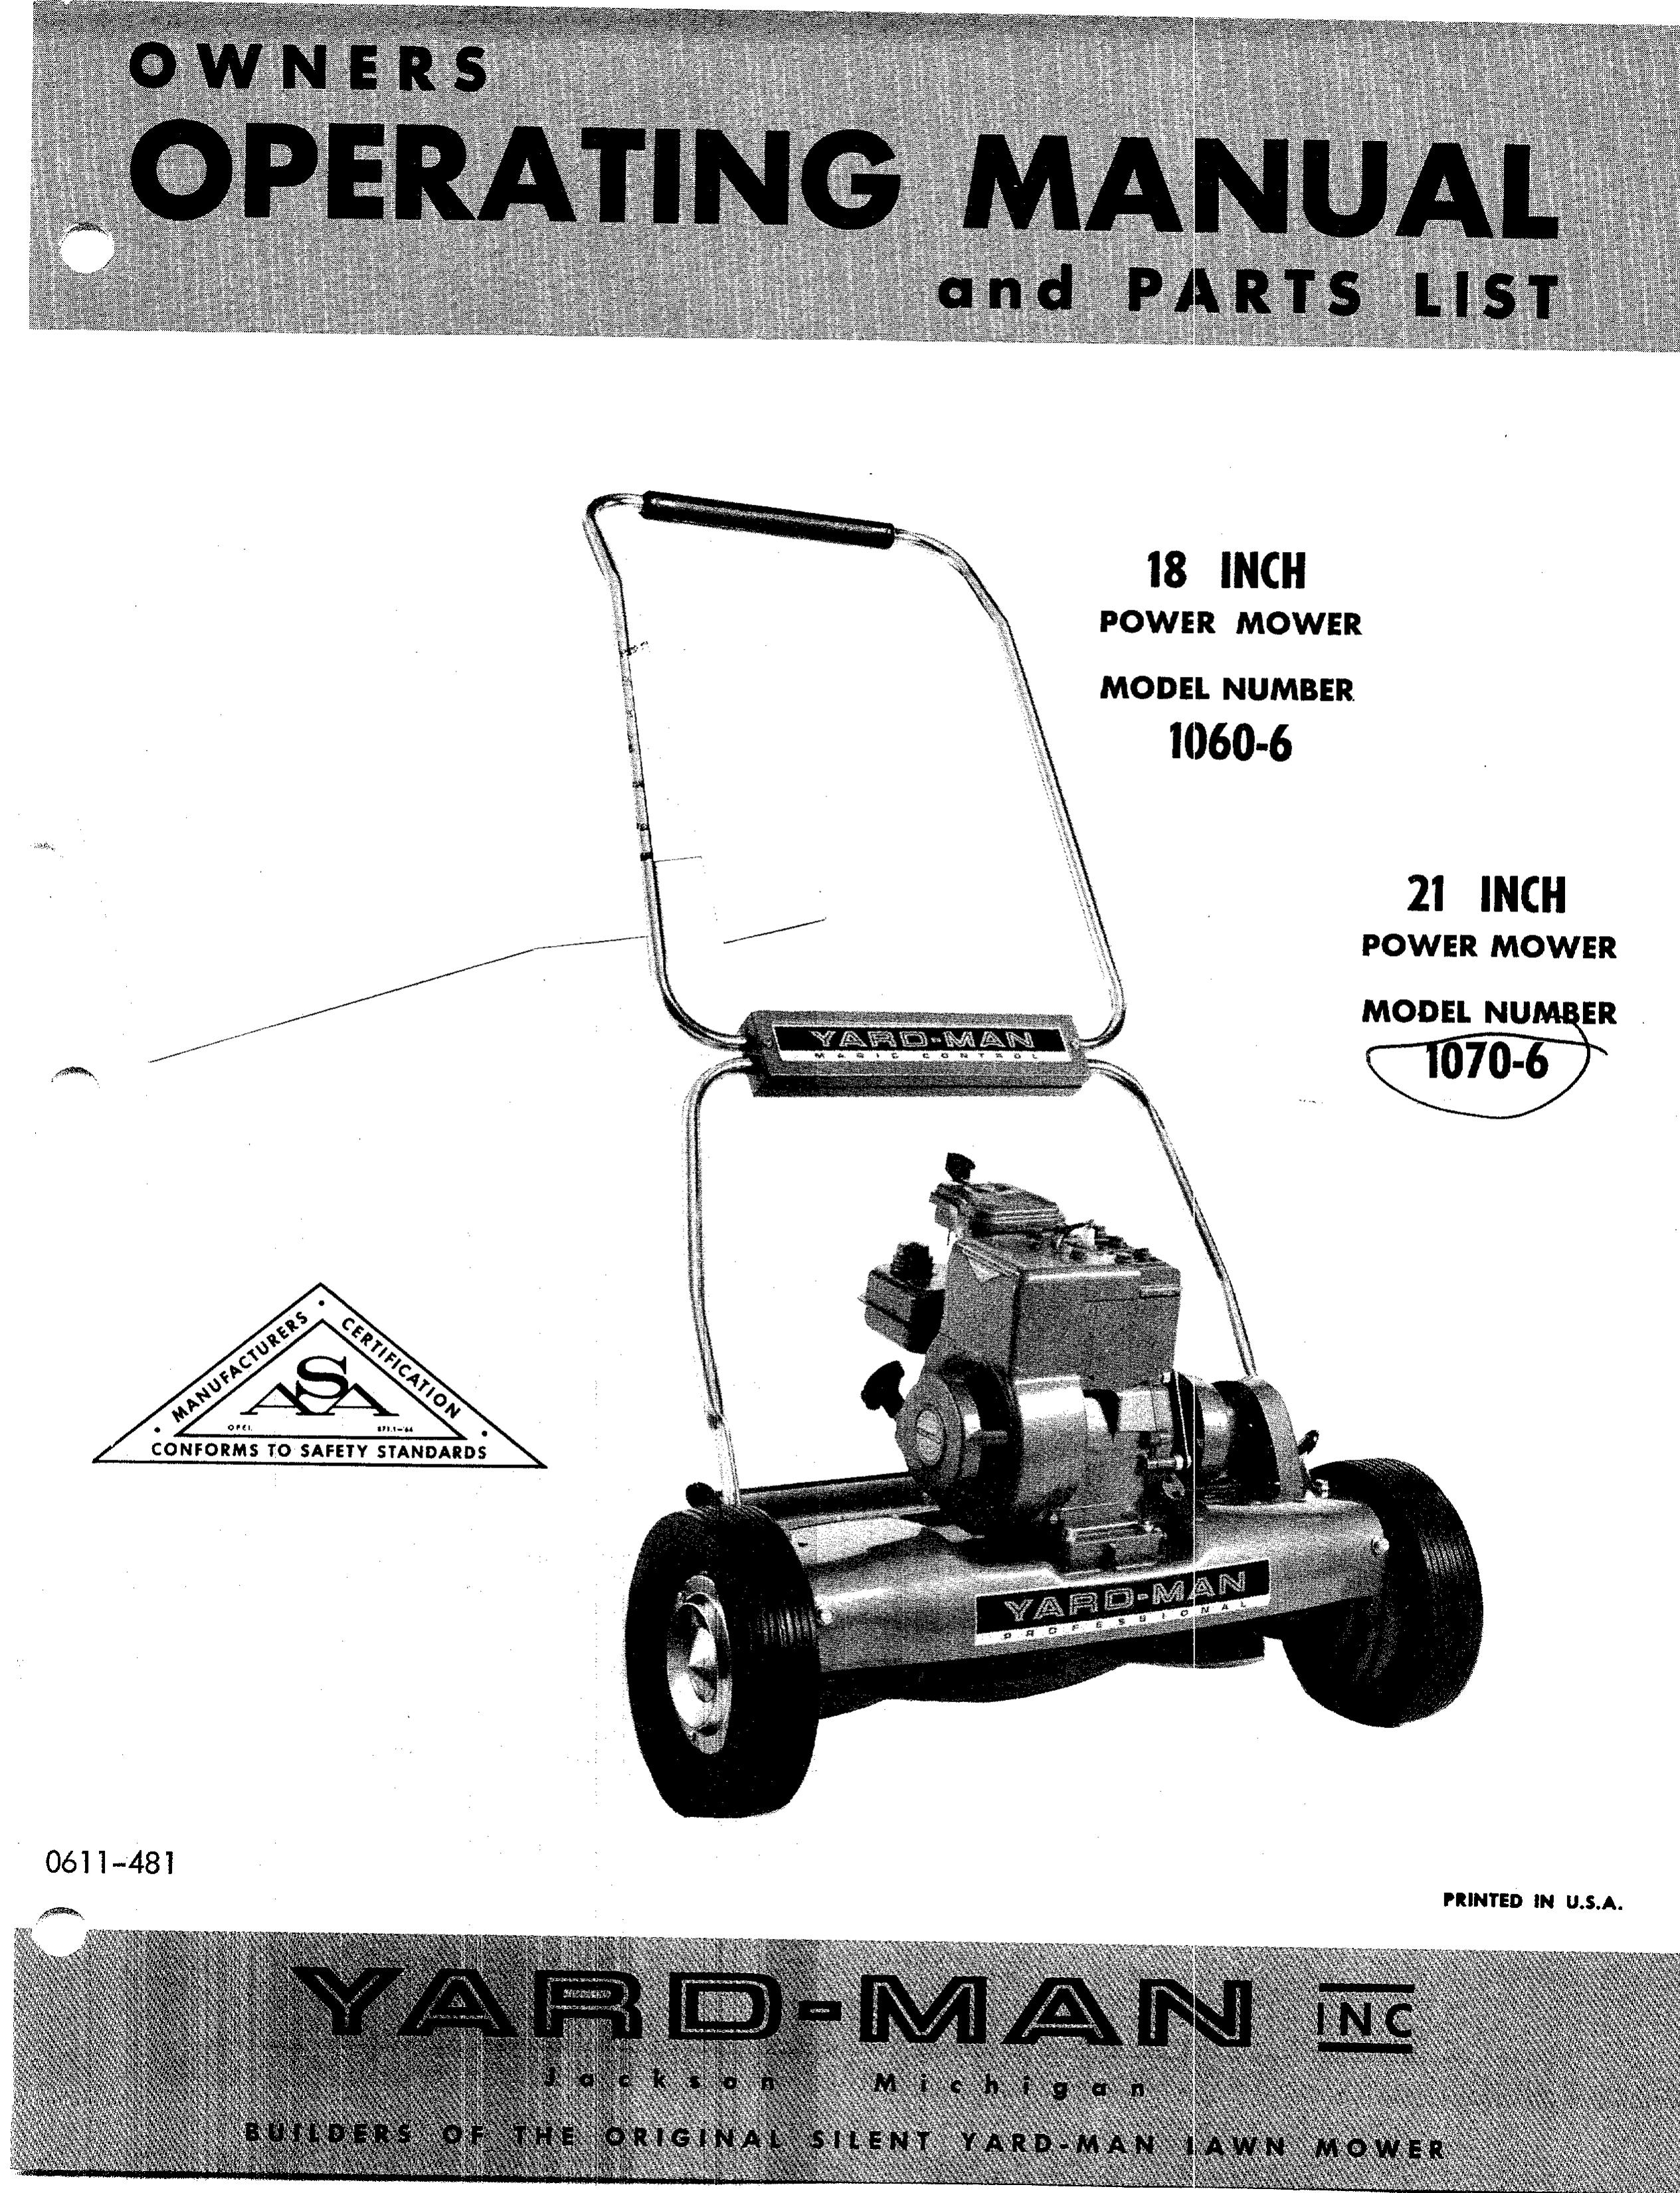 Yard-Man 1060-6 Lawn Mower User Manual